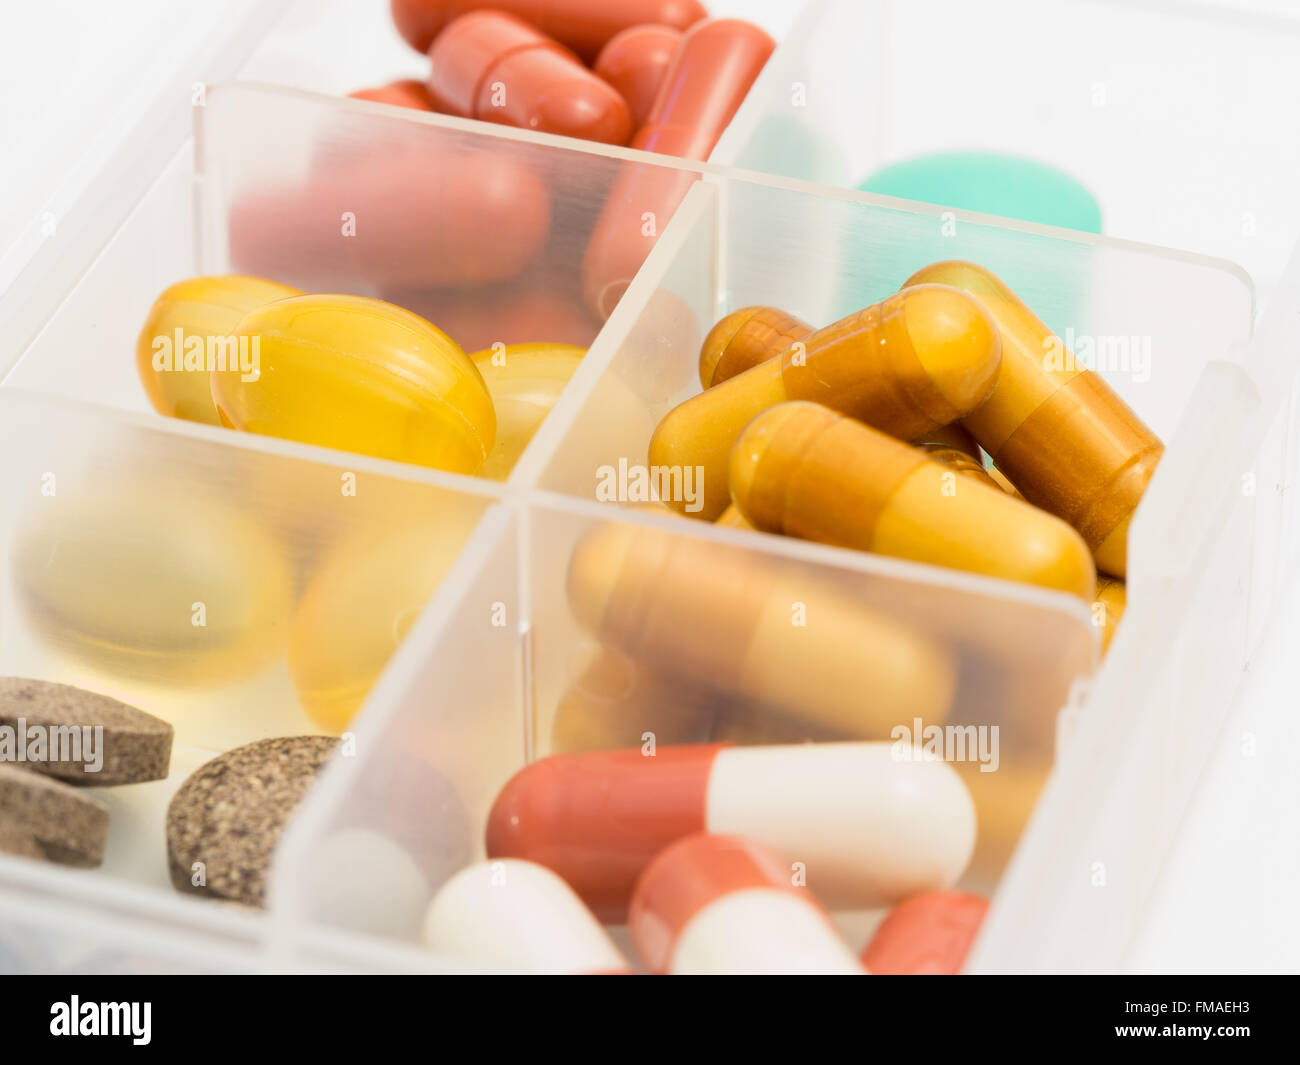 Un contenedor de píldoras con diferentes medicamentos. Foto de stock